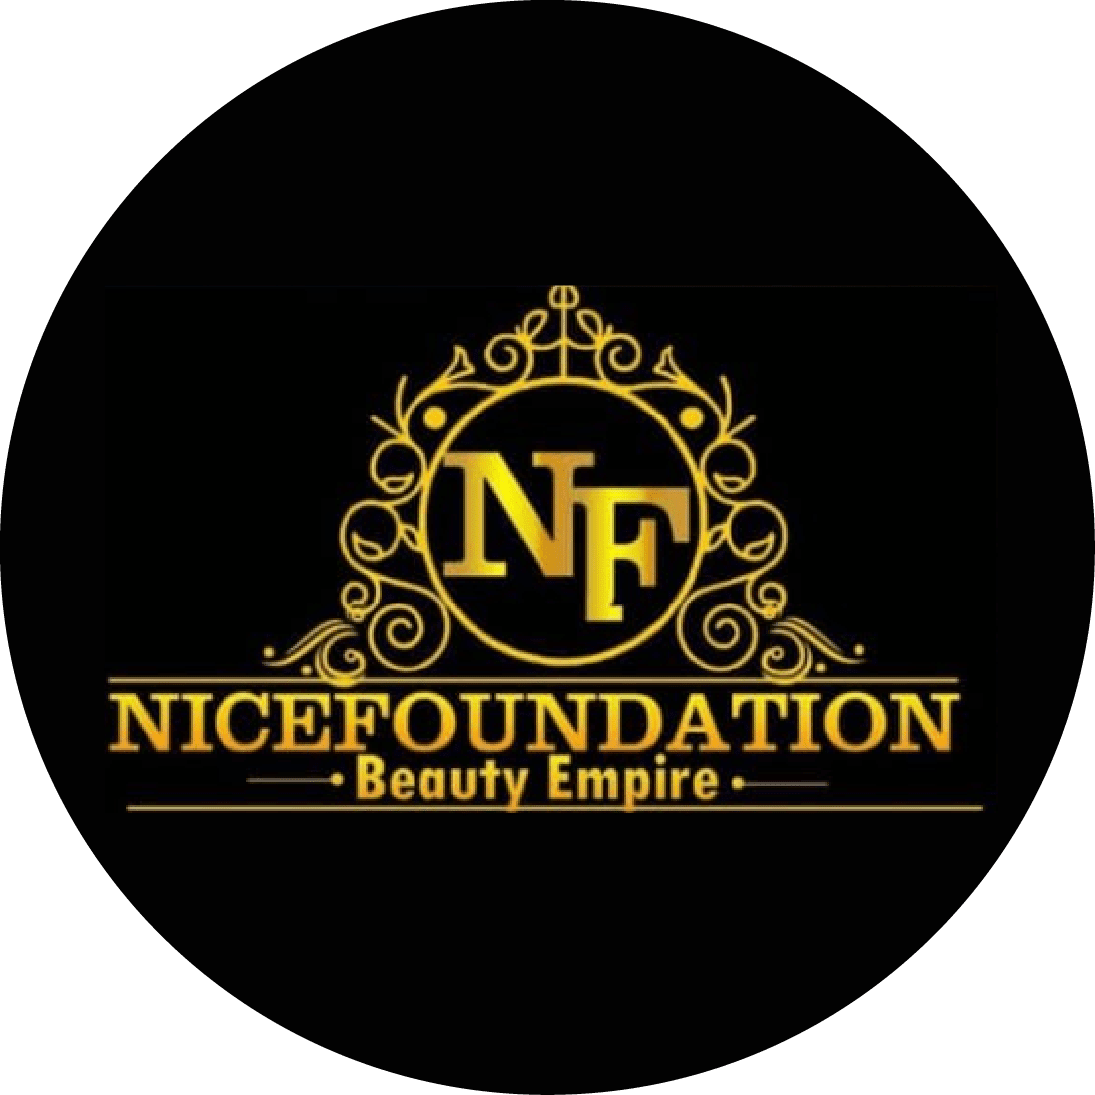 Nicefoundation Beauty Empire